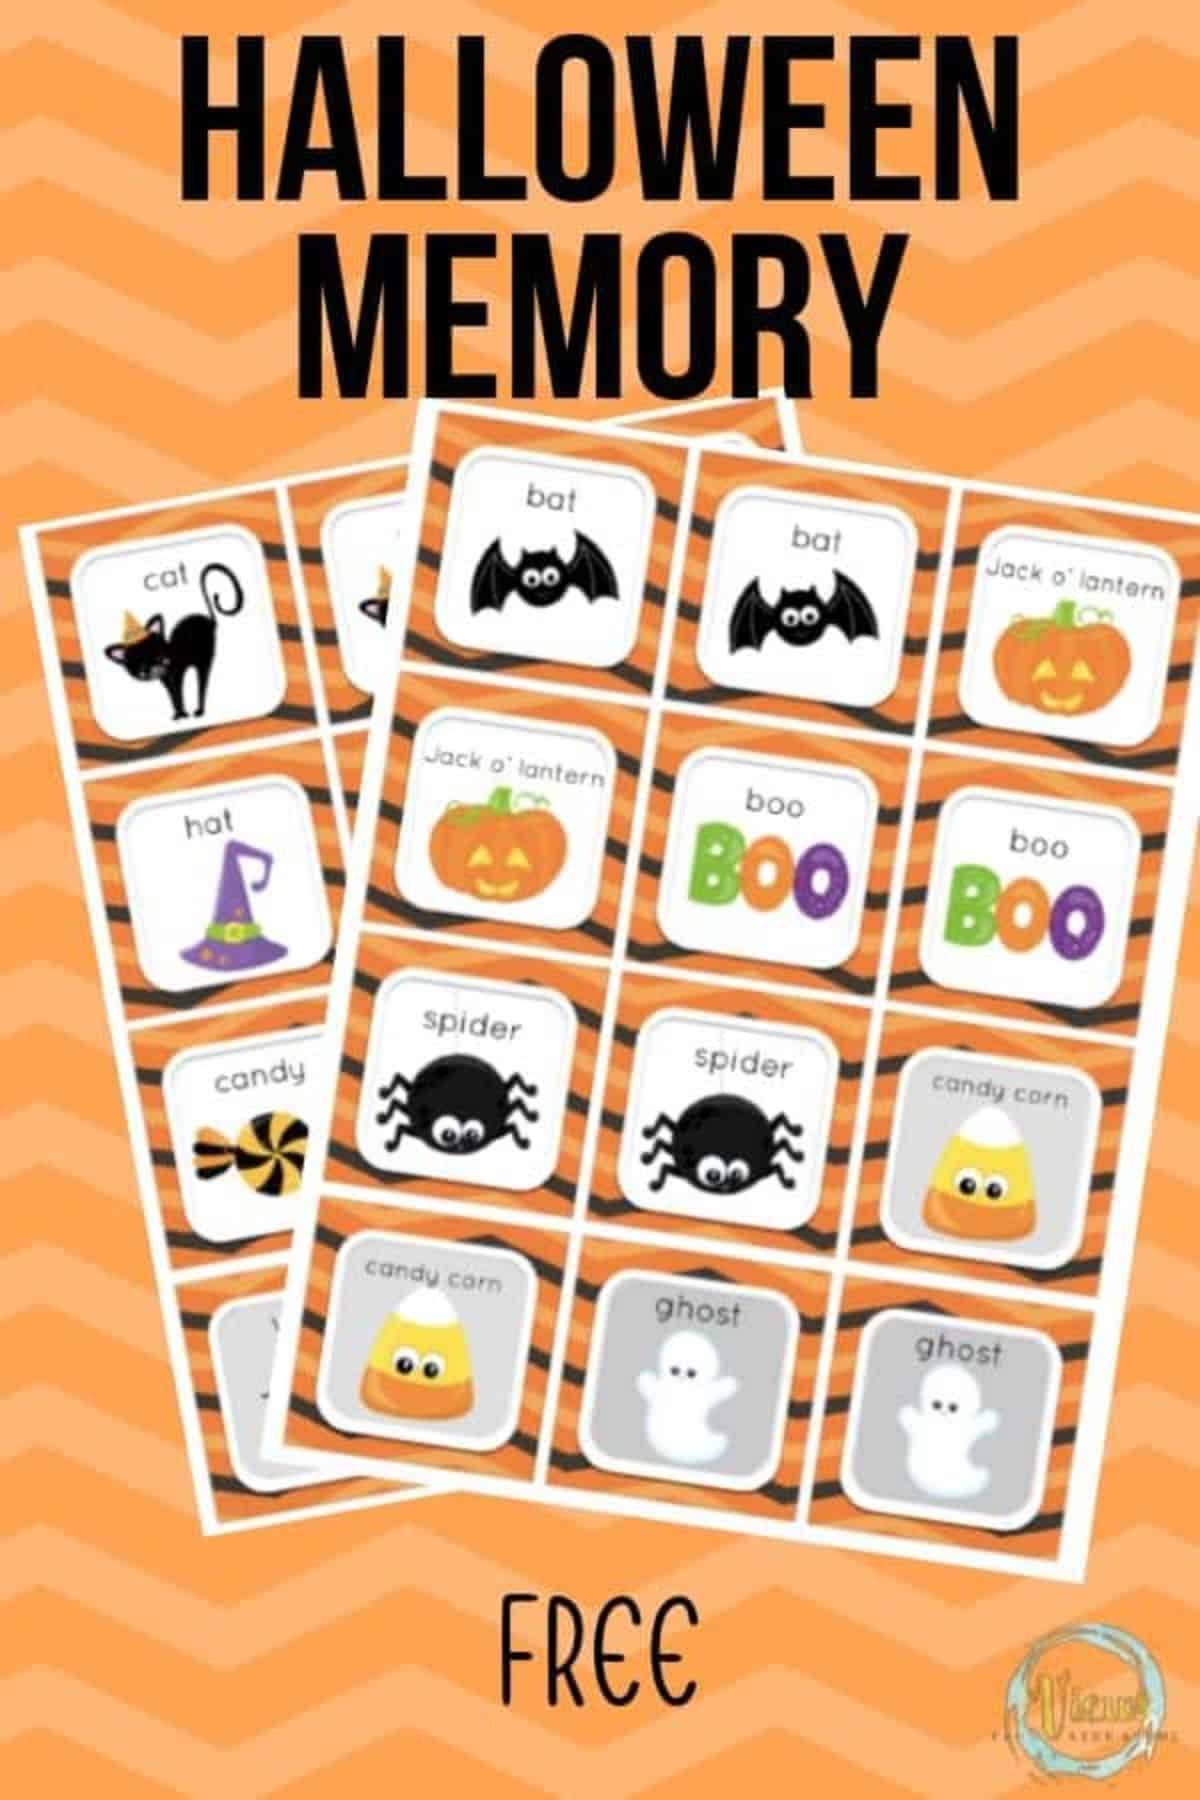 Halloween memory game poster.